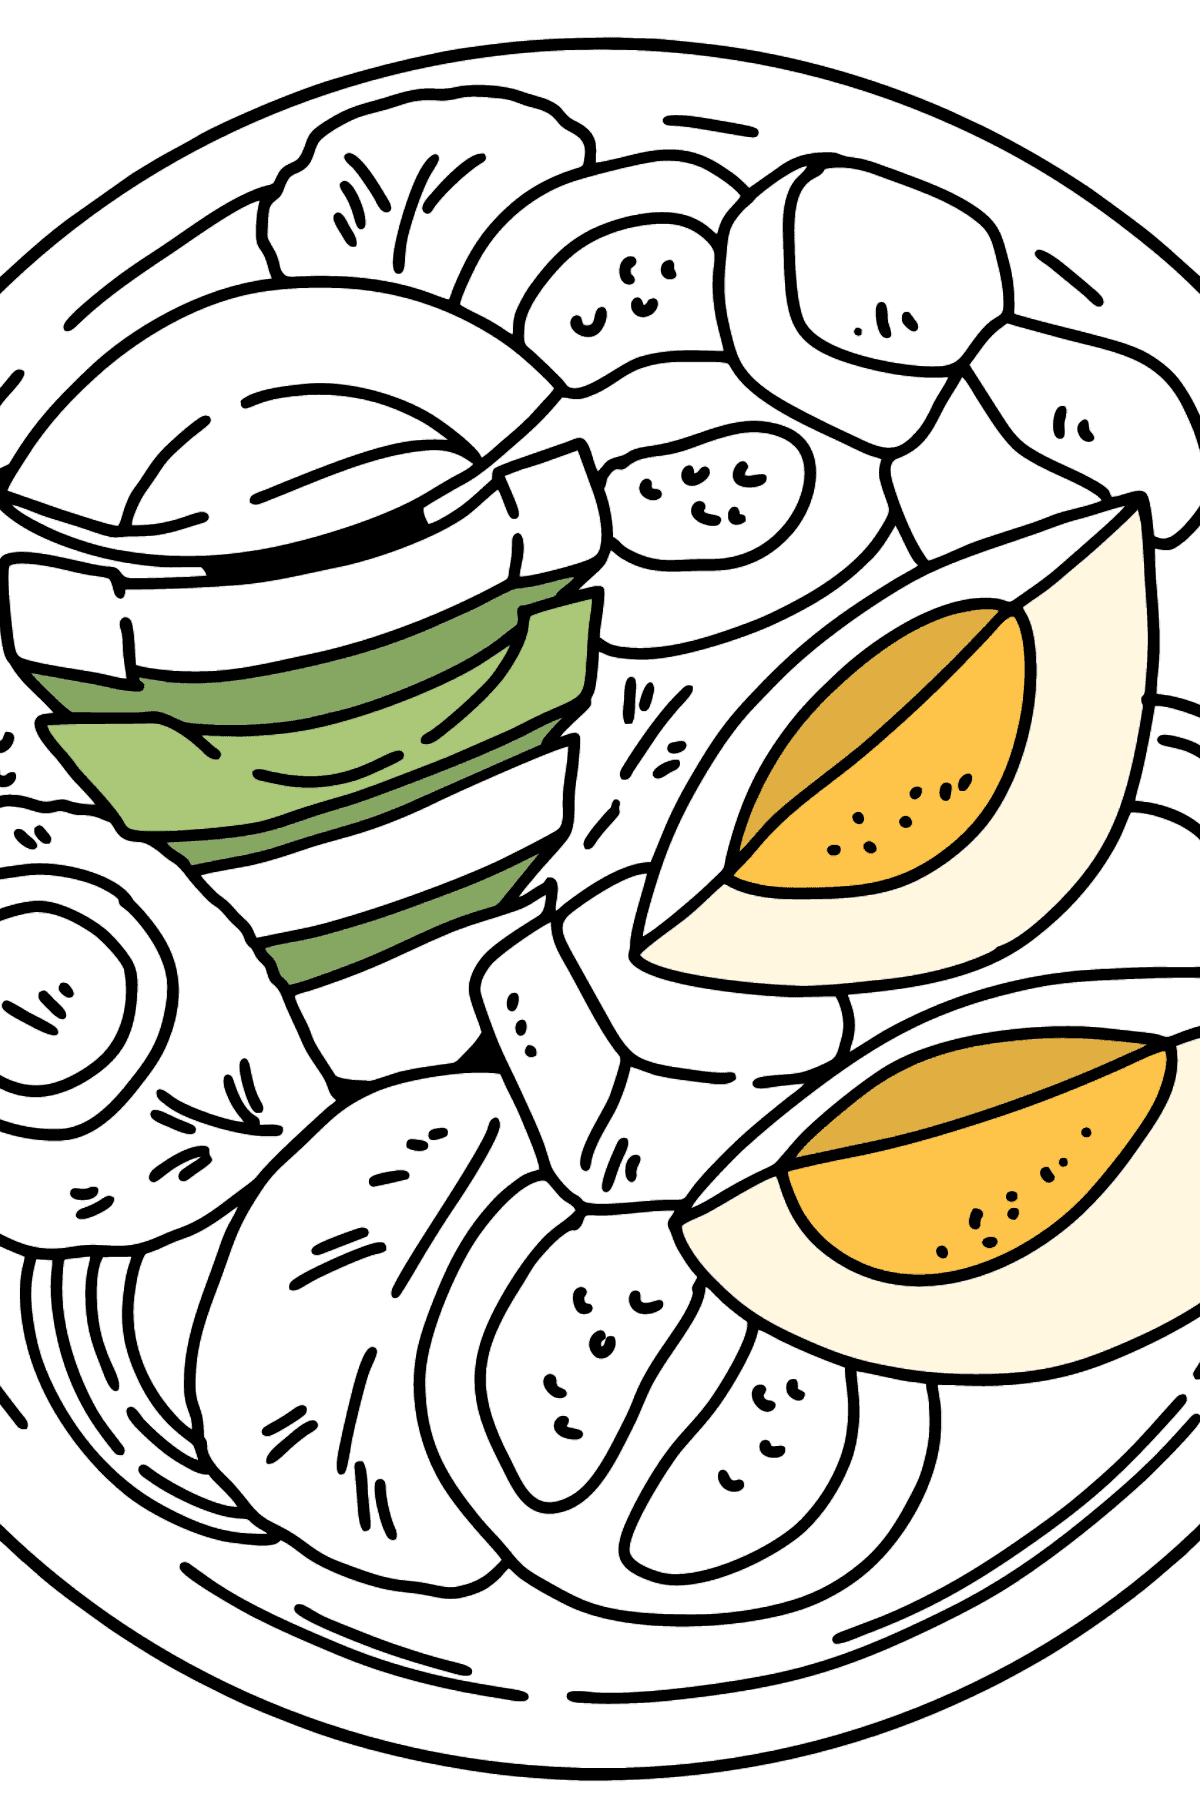 Розмальовка Салат з авокадо - Розмальовки для дітей